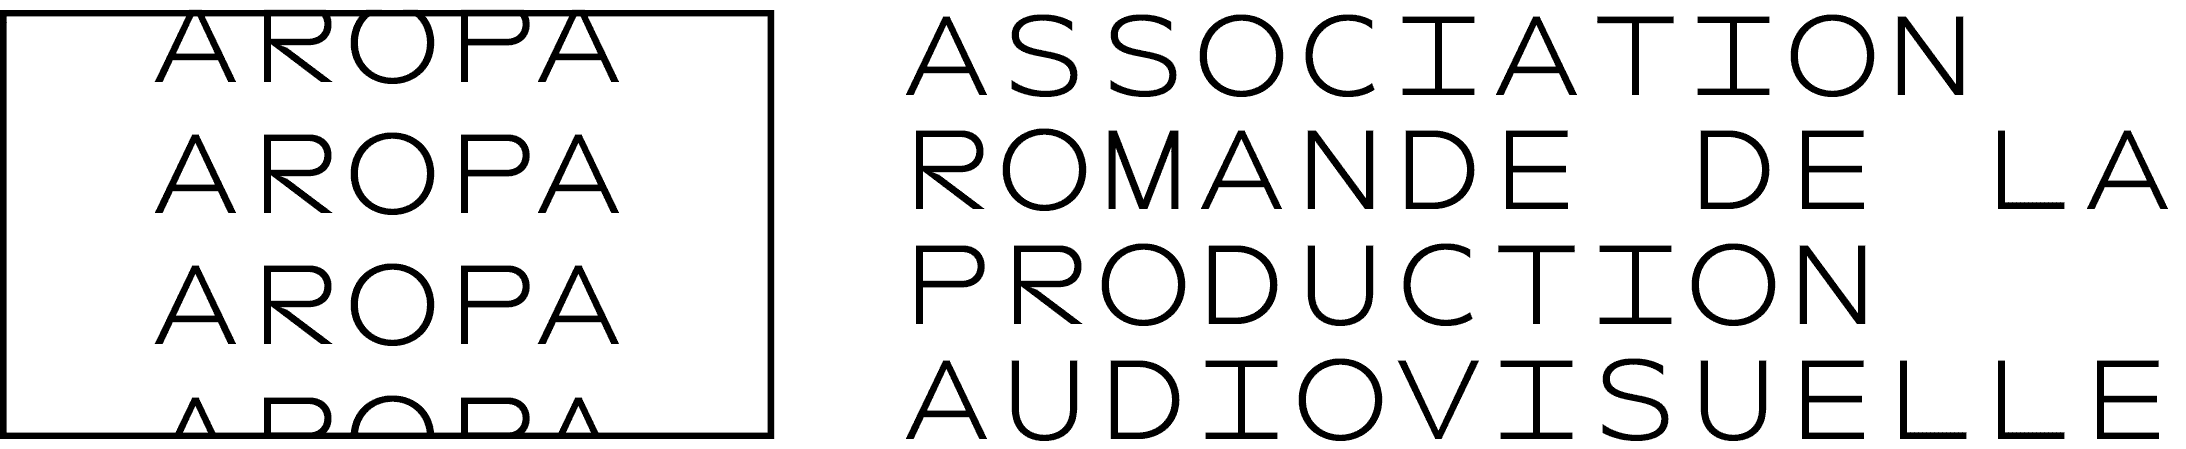 AROPA, Association romande de la production audiovisuelle